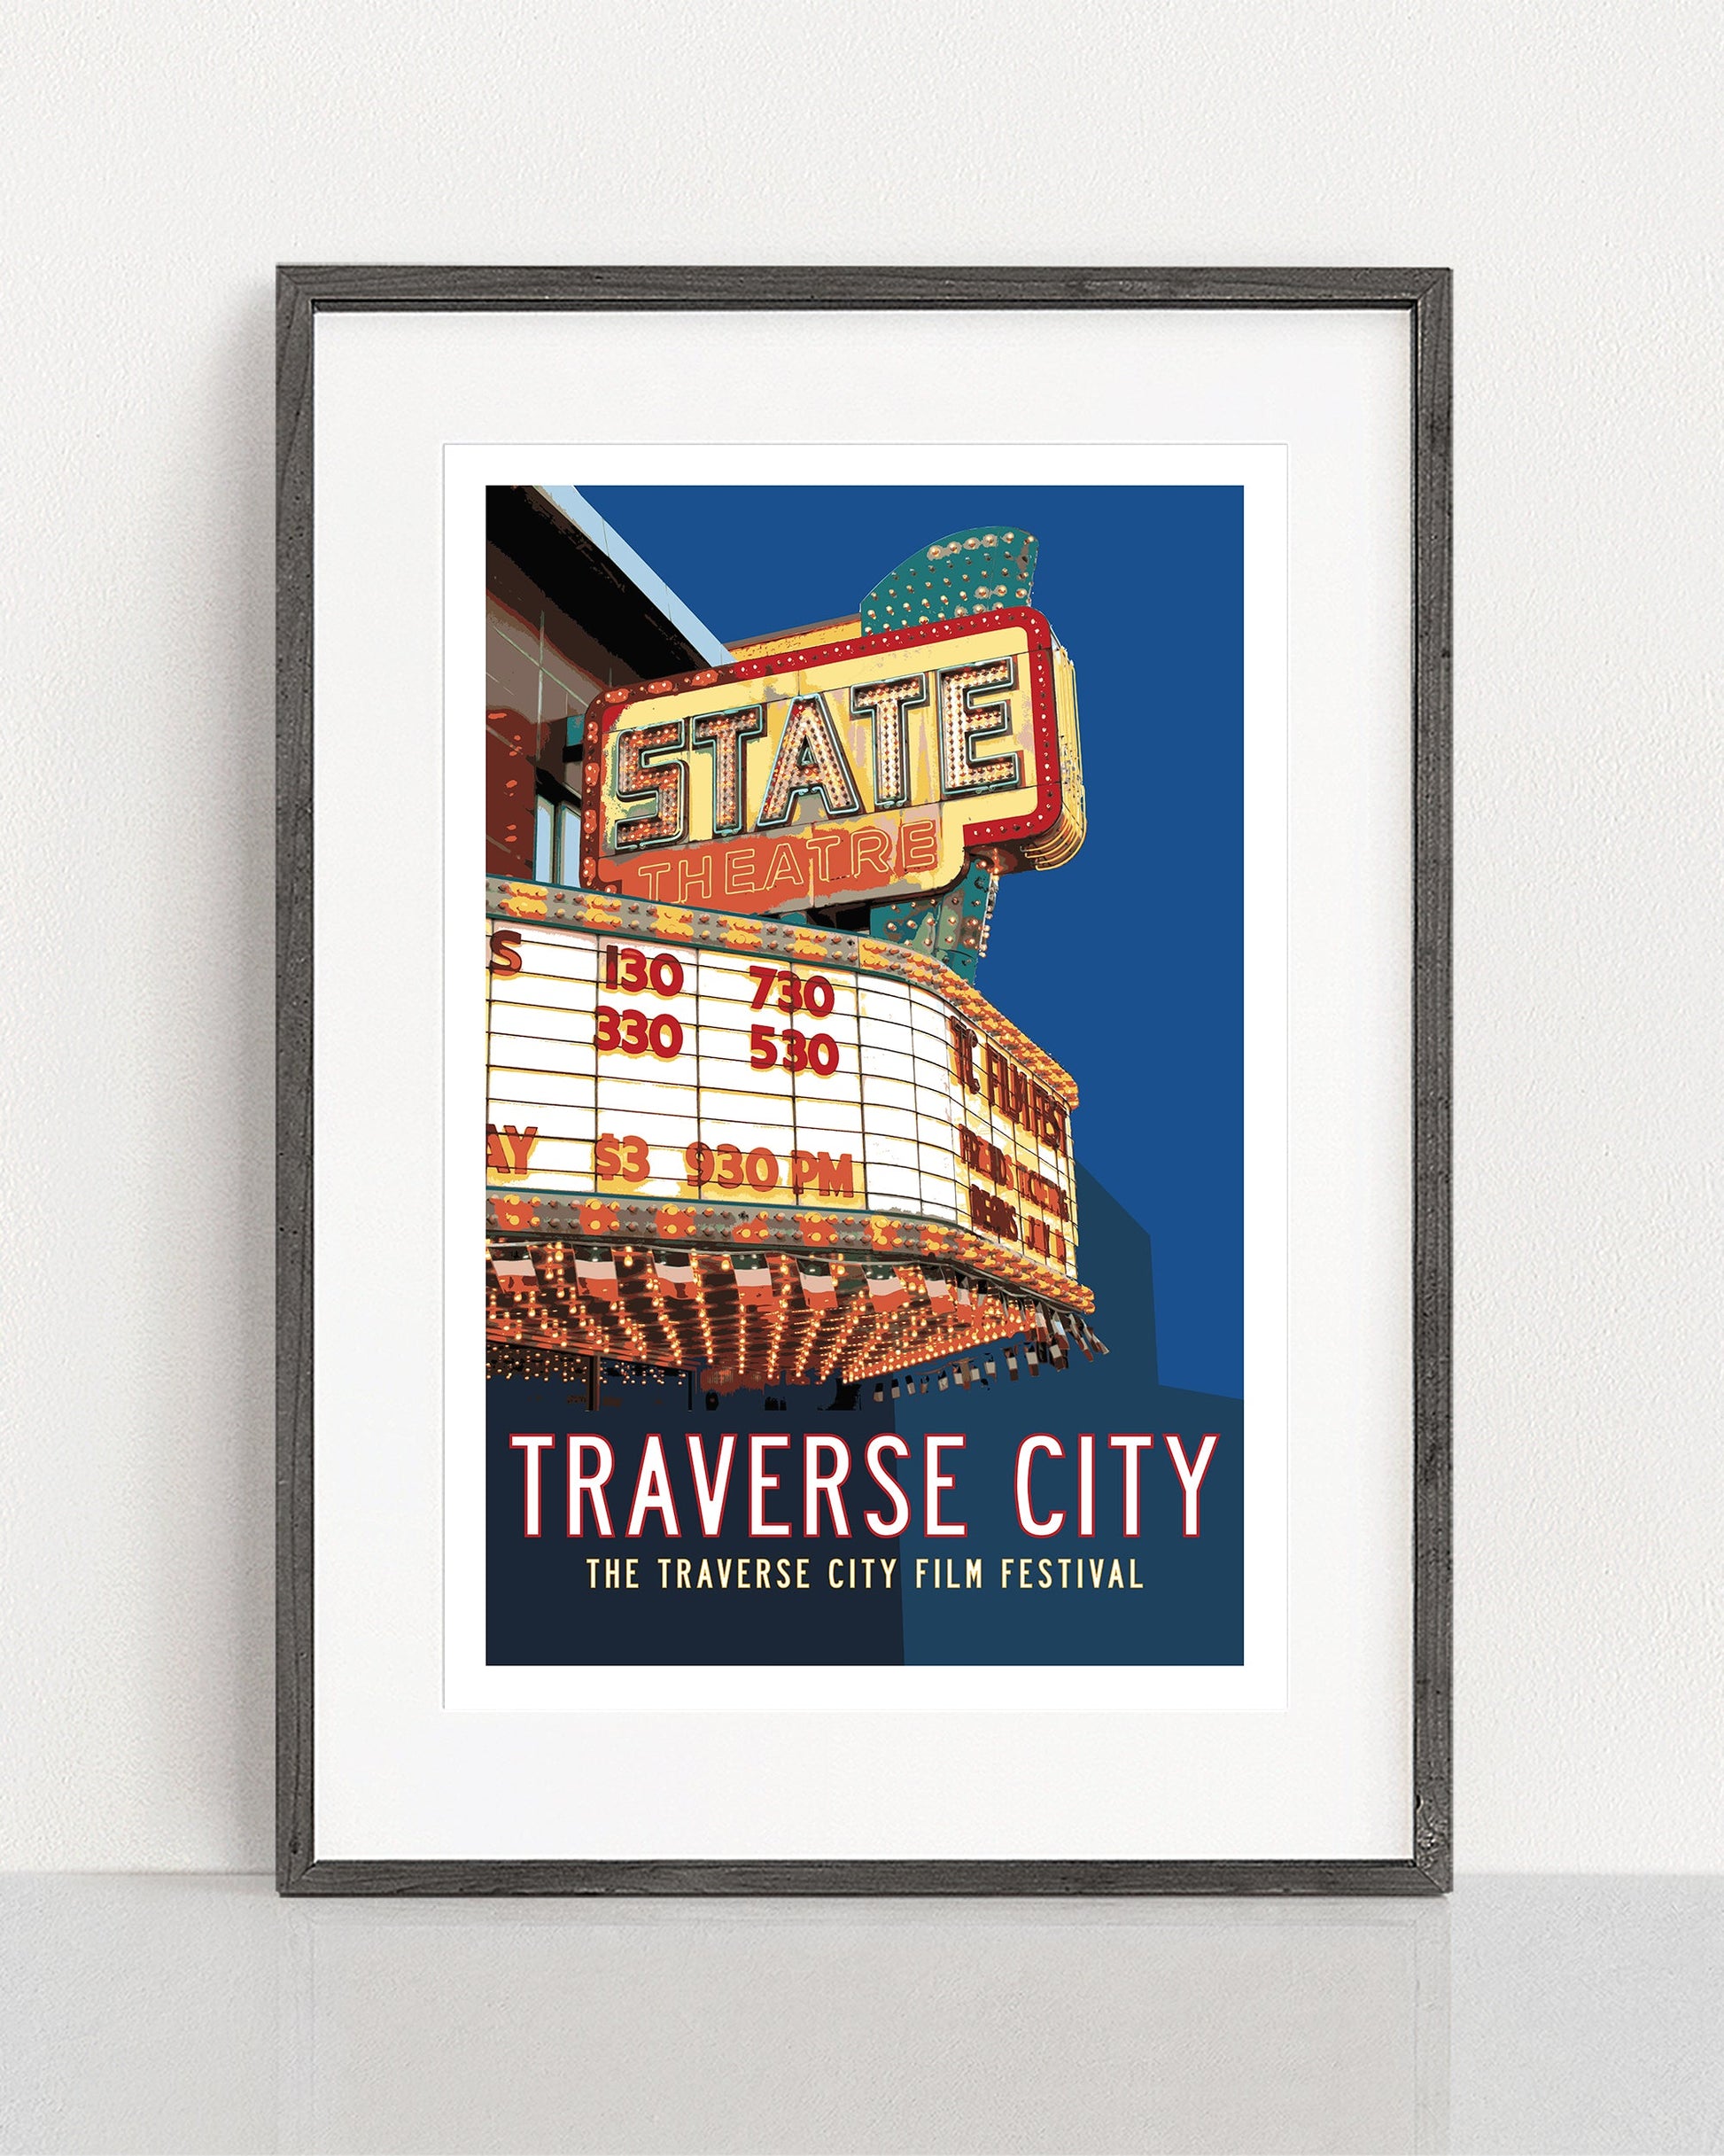 Framed Traverse City State Theatre Film Festival Poster - Transit Design